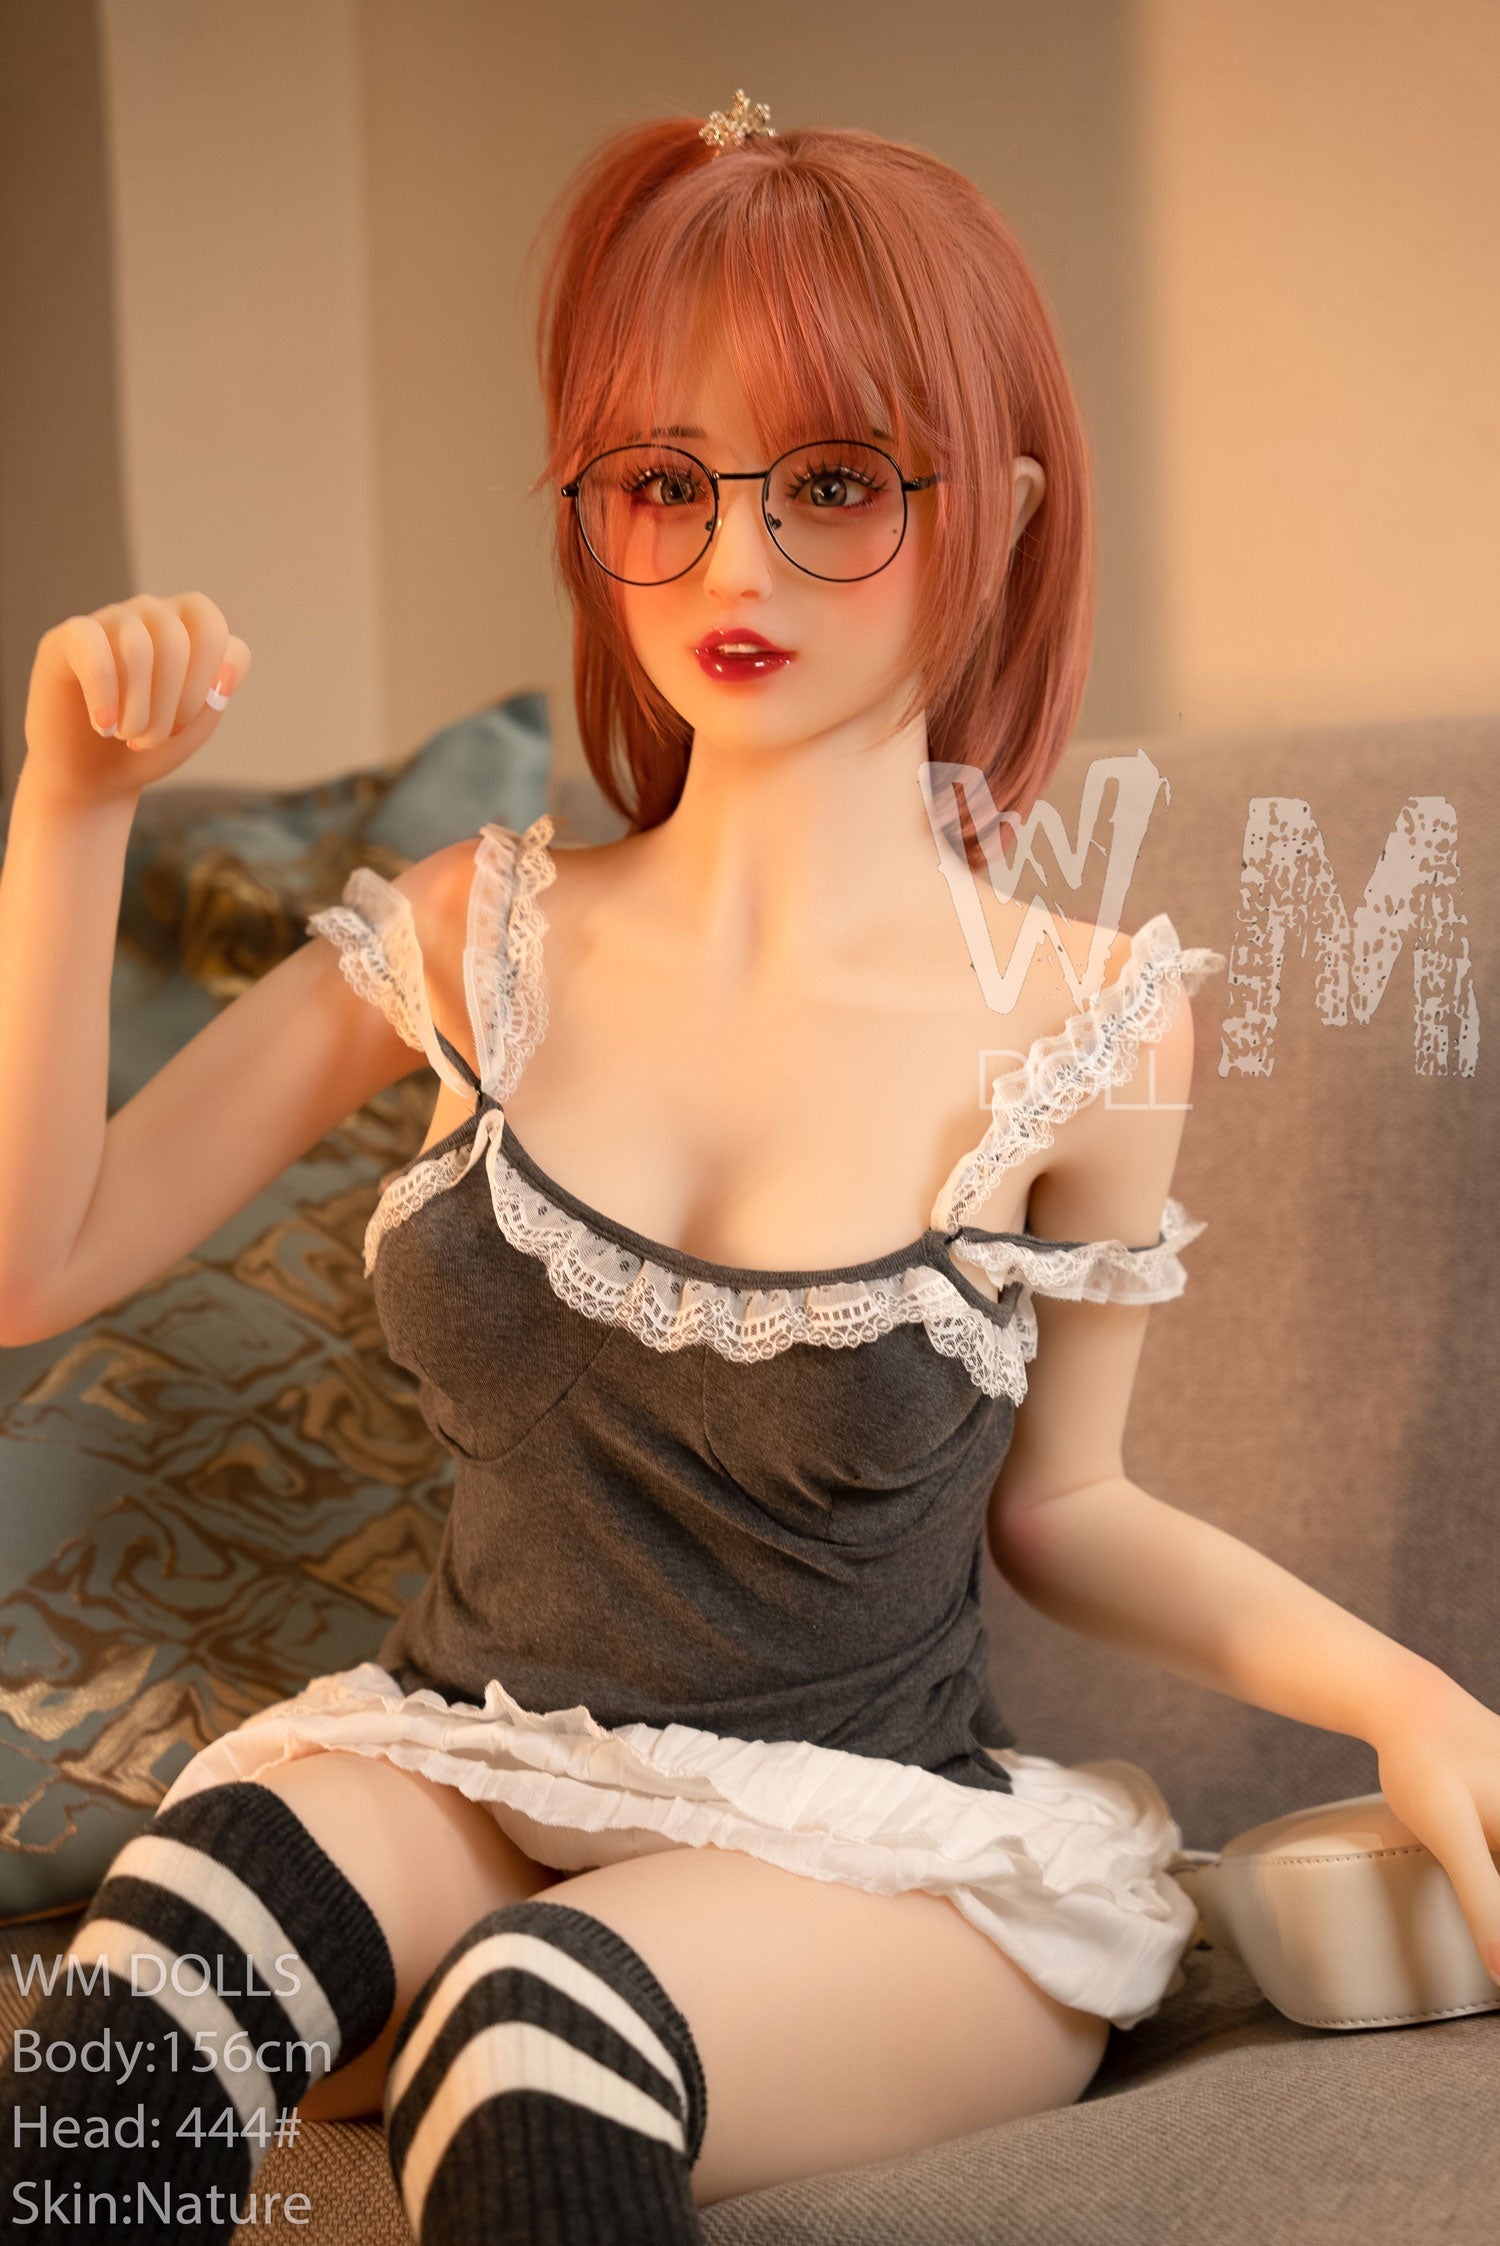 WM Doll 156 cm C TPE - Alaia | Buy Sex Dolls at DOLLS ACTUALLY